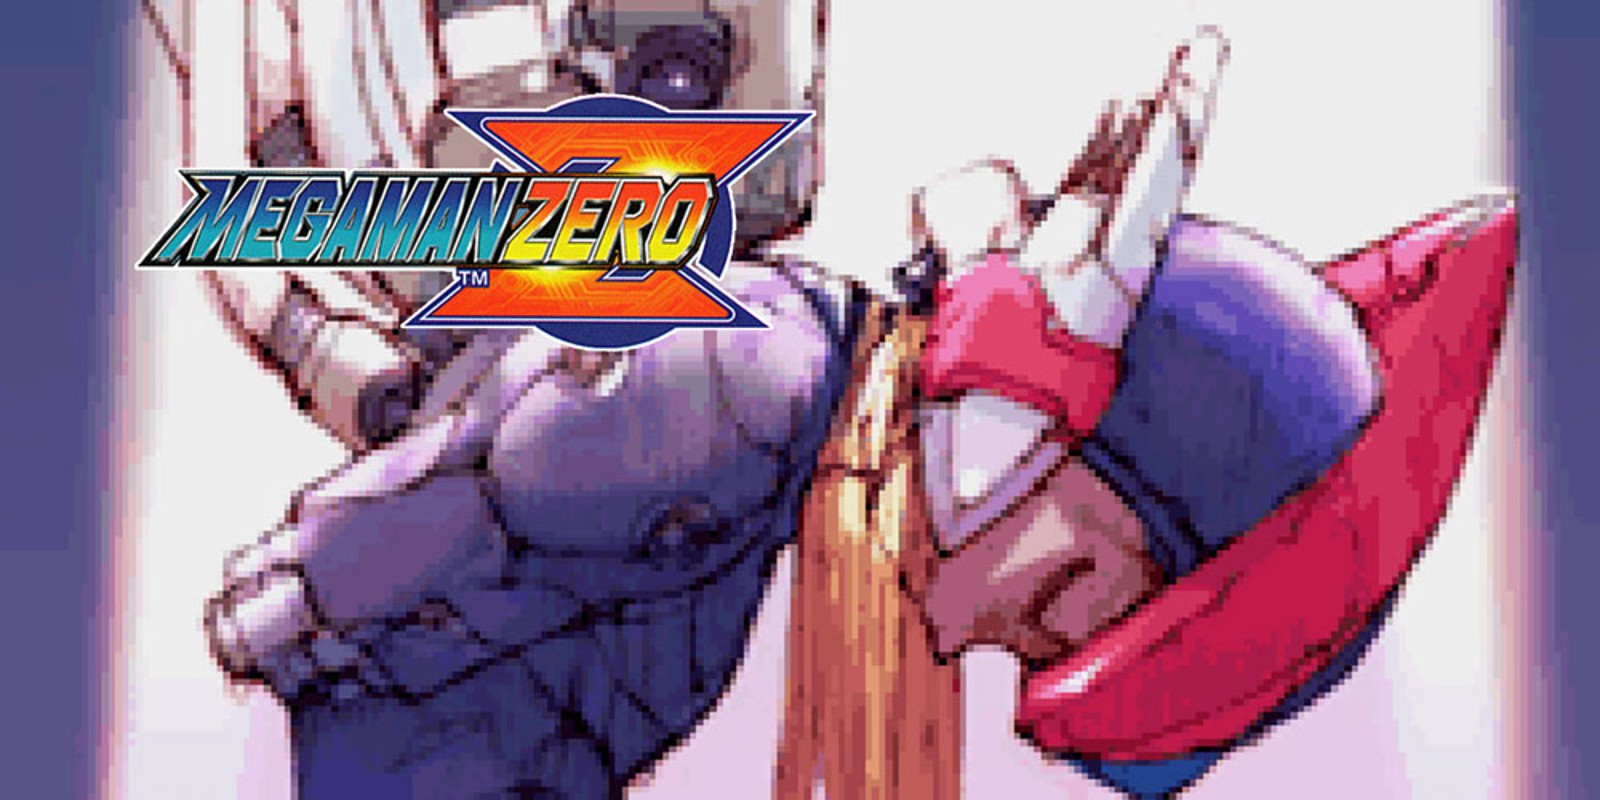 Mega Man Zero